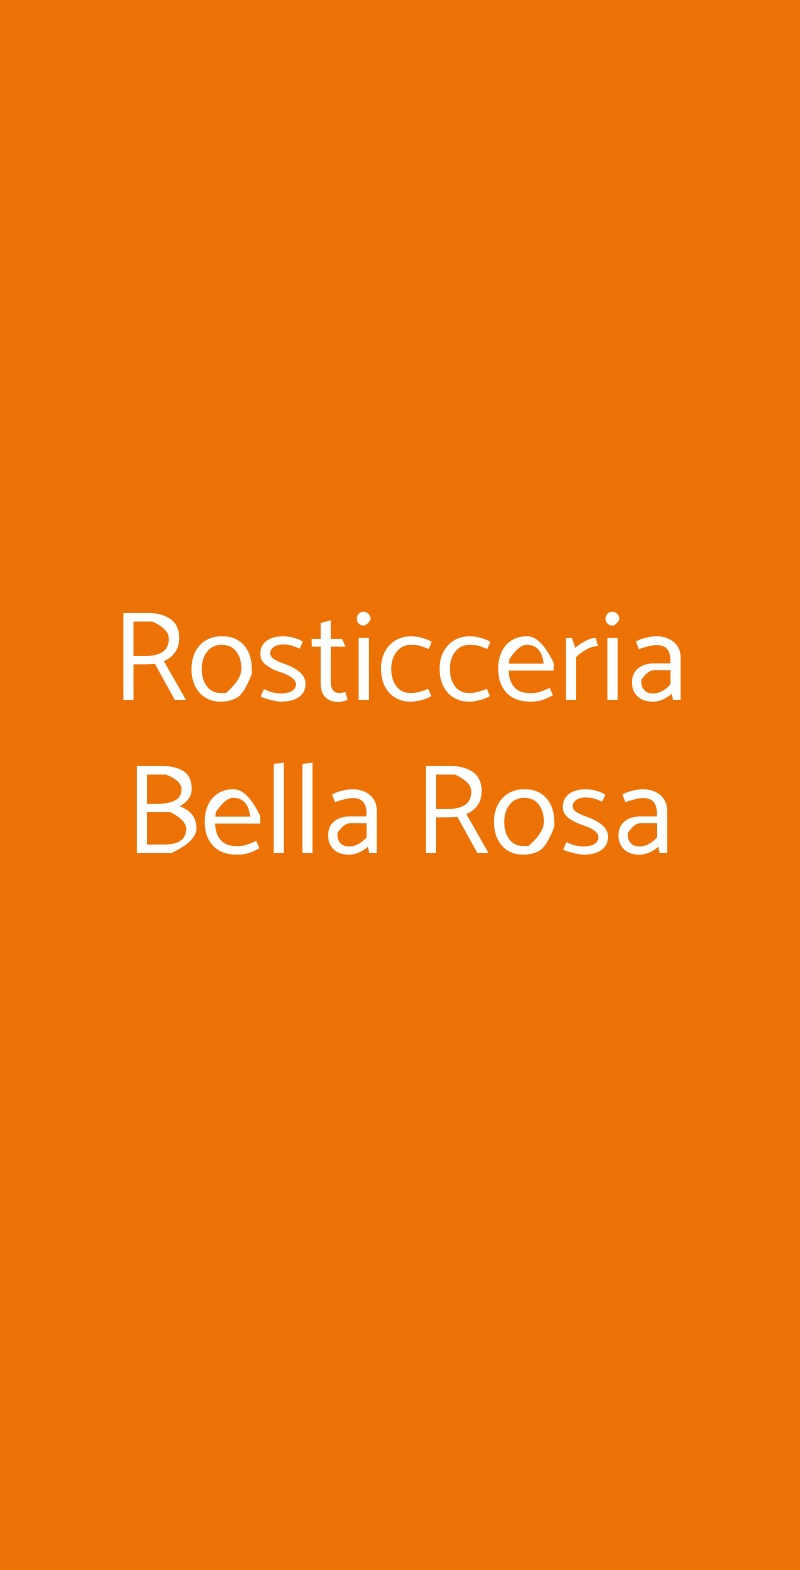 Rosticceria Bella Rosa Modena menù 1 pagina